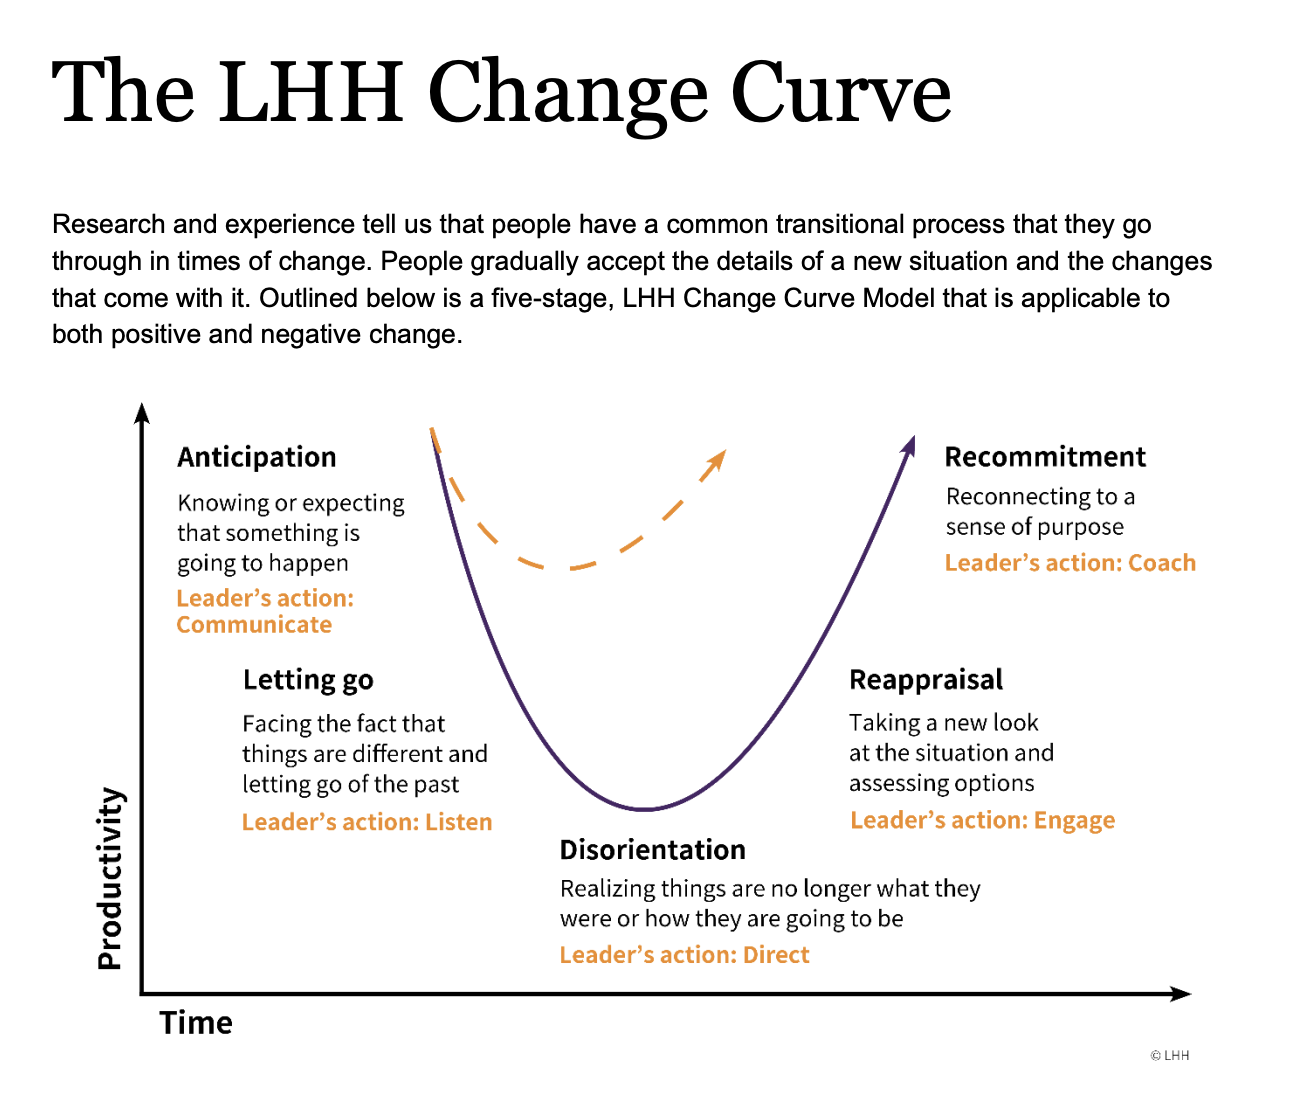 The LHH Change Curve